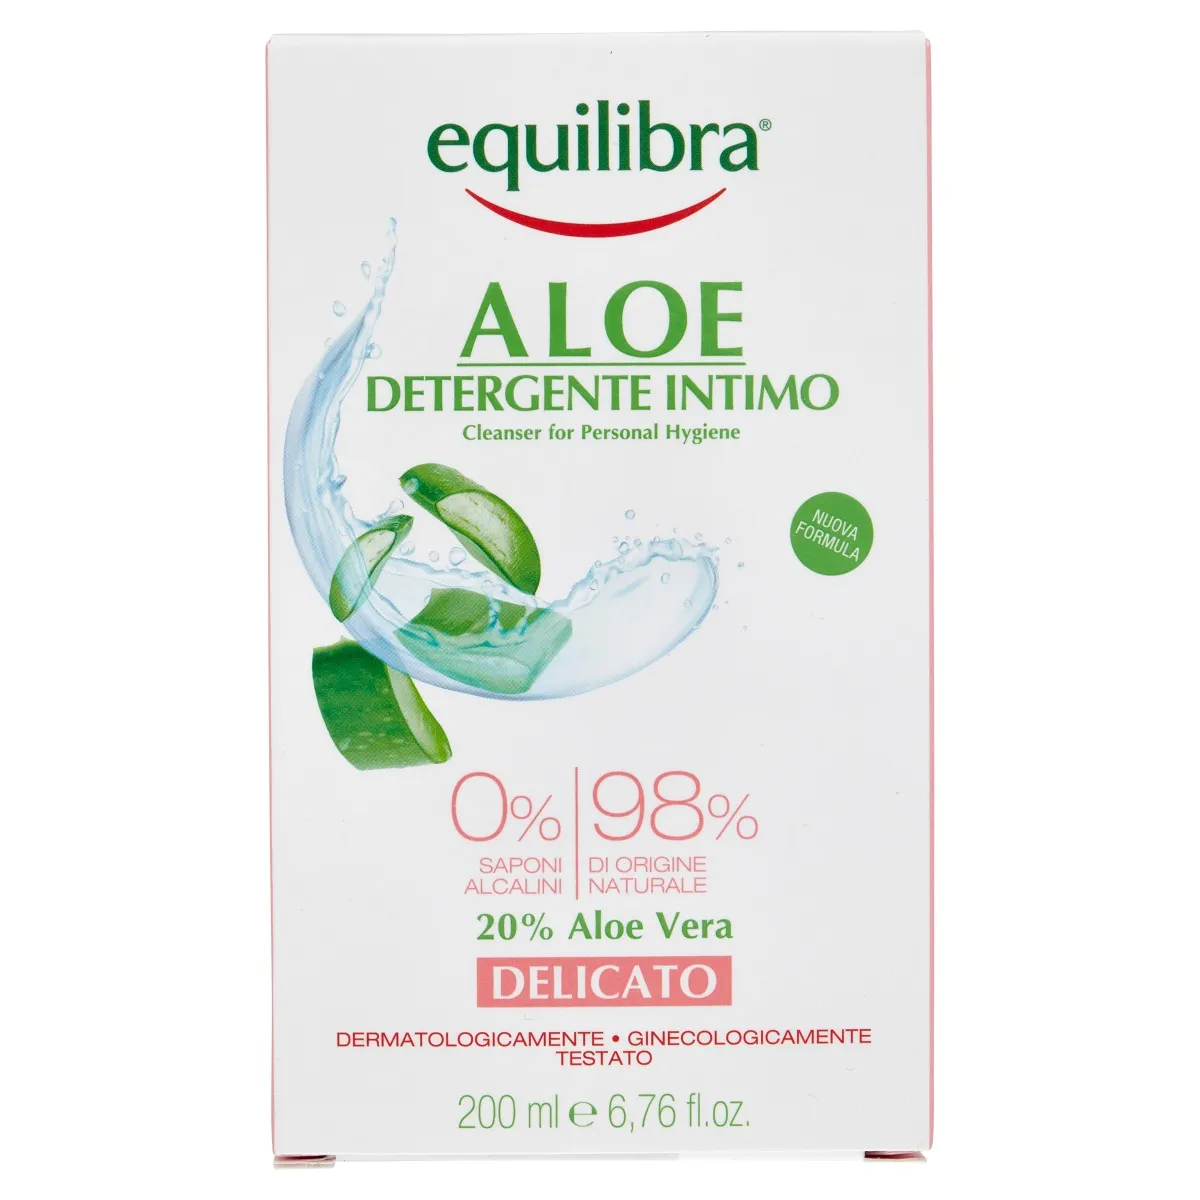 Equilibra Aloe Detergente Intimo Delicato 200 ml Idratante